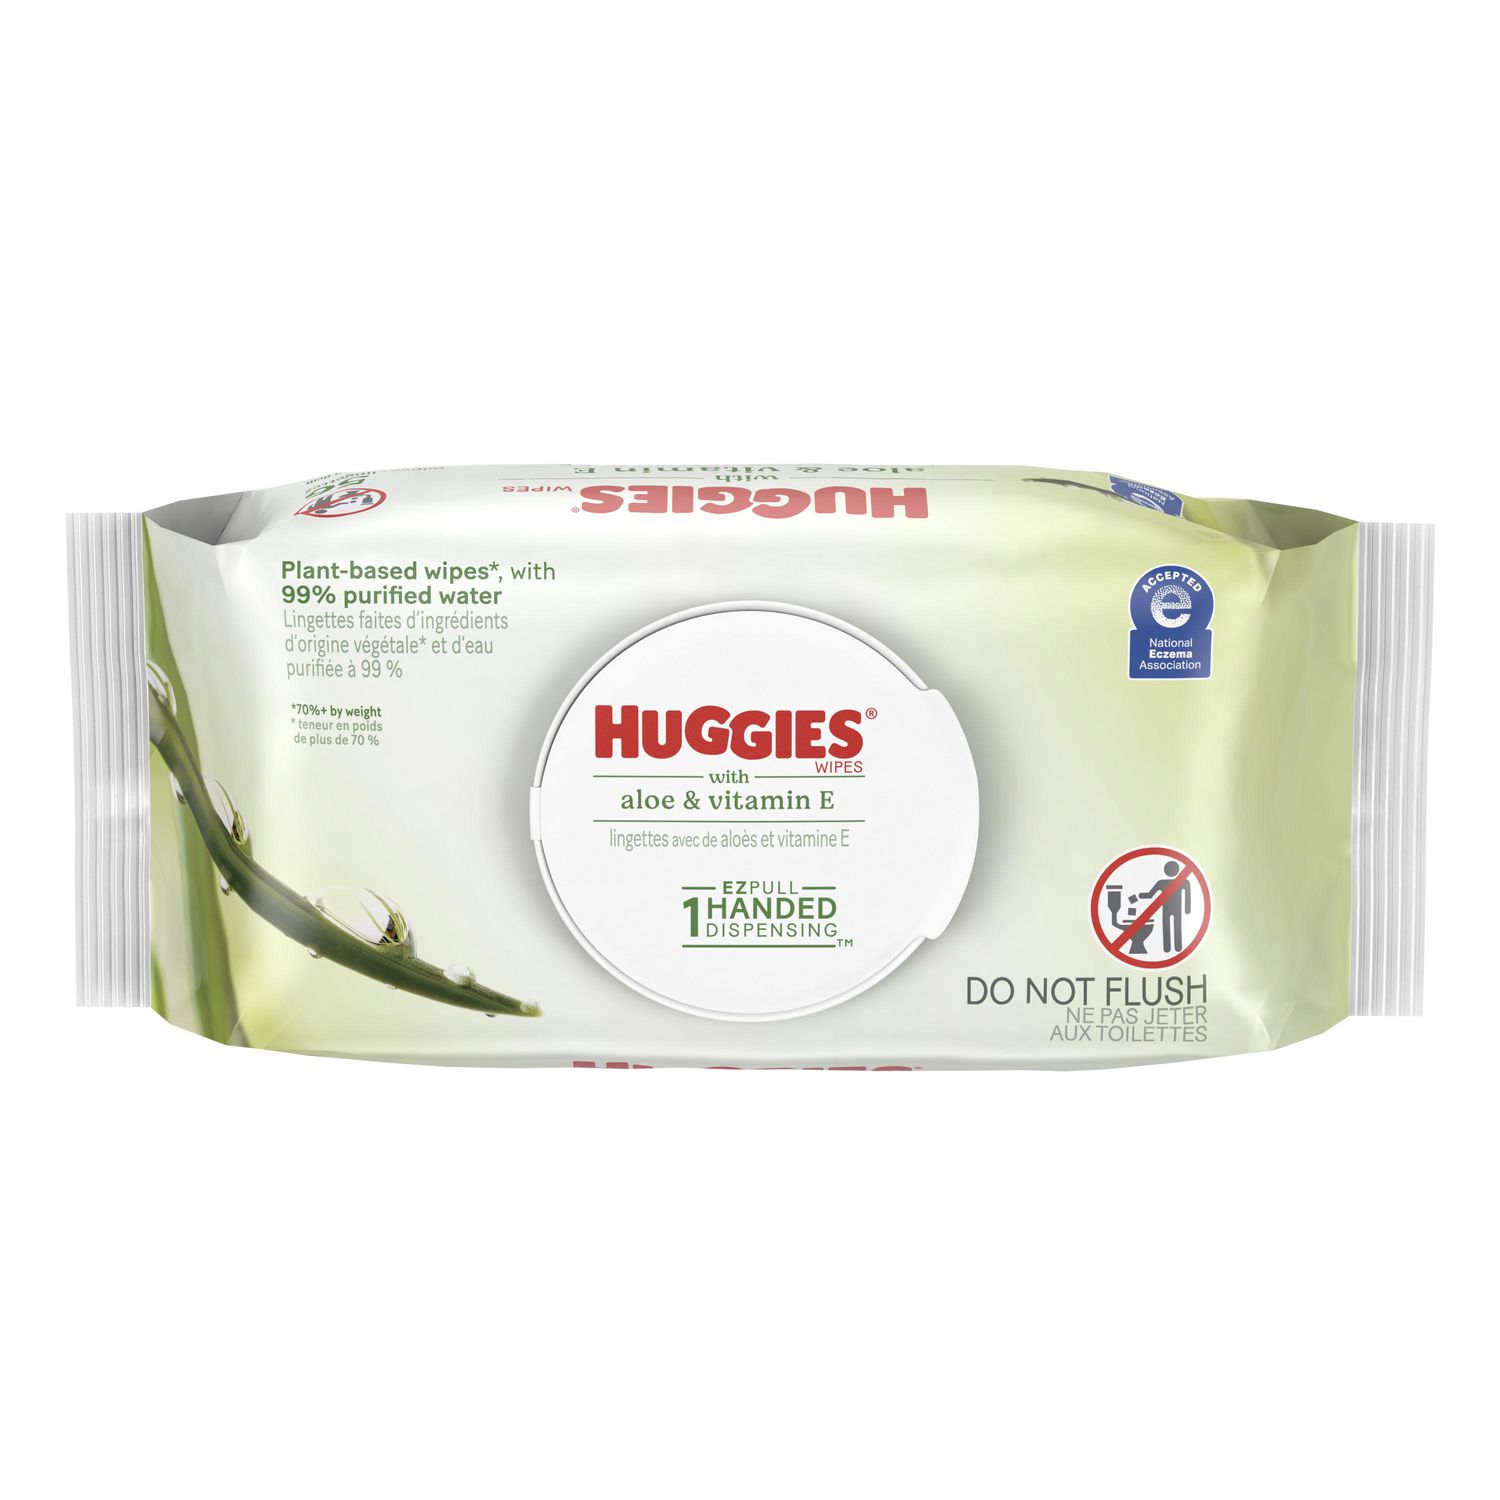 Huggies Aloe & Vitamin E, UNSCENTED, 1 Flip Top Pack, 56 Wipes, 56 Wipes